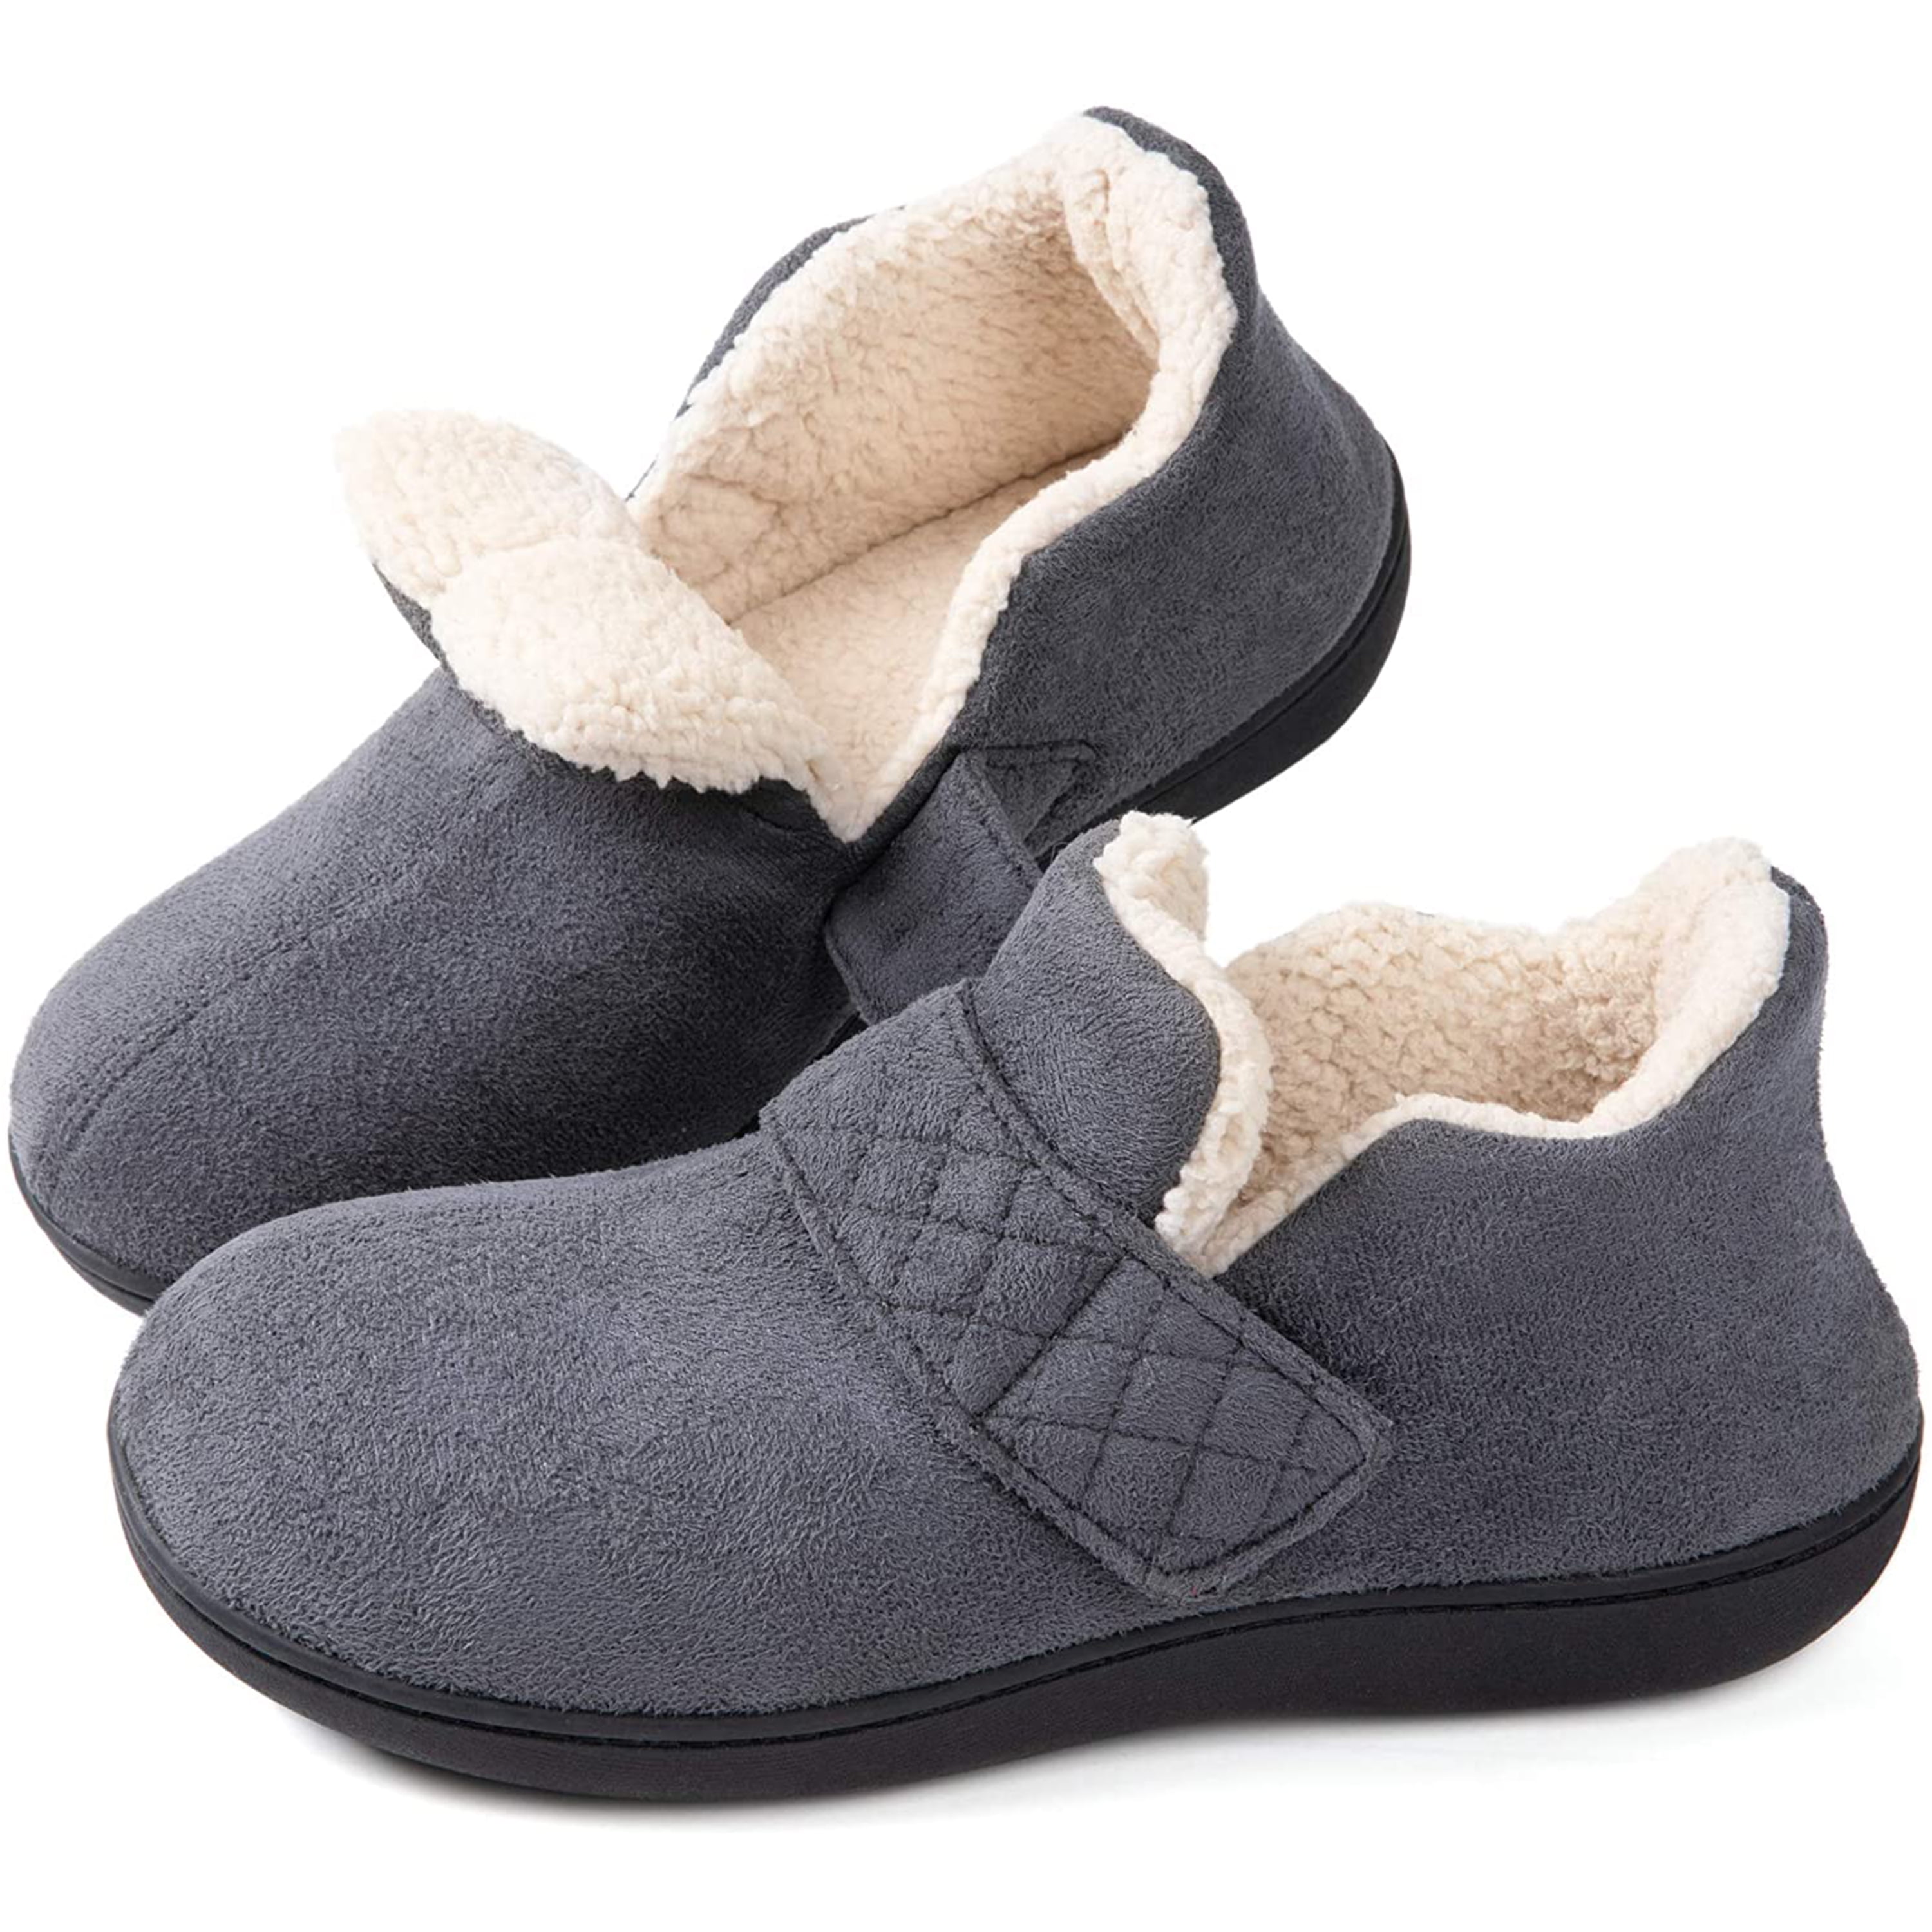 Wool-Like Plush Fleece Lined House Shoes iisutas Womens Comfort Memory Foam Slippers